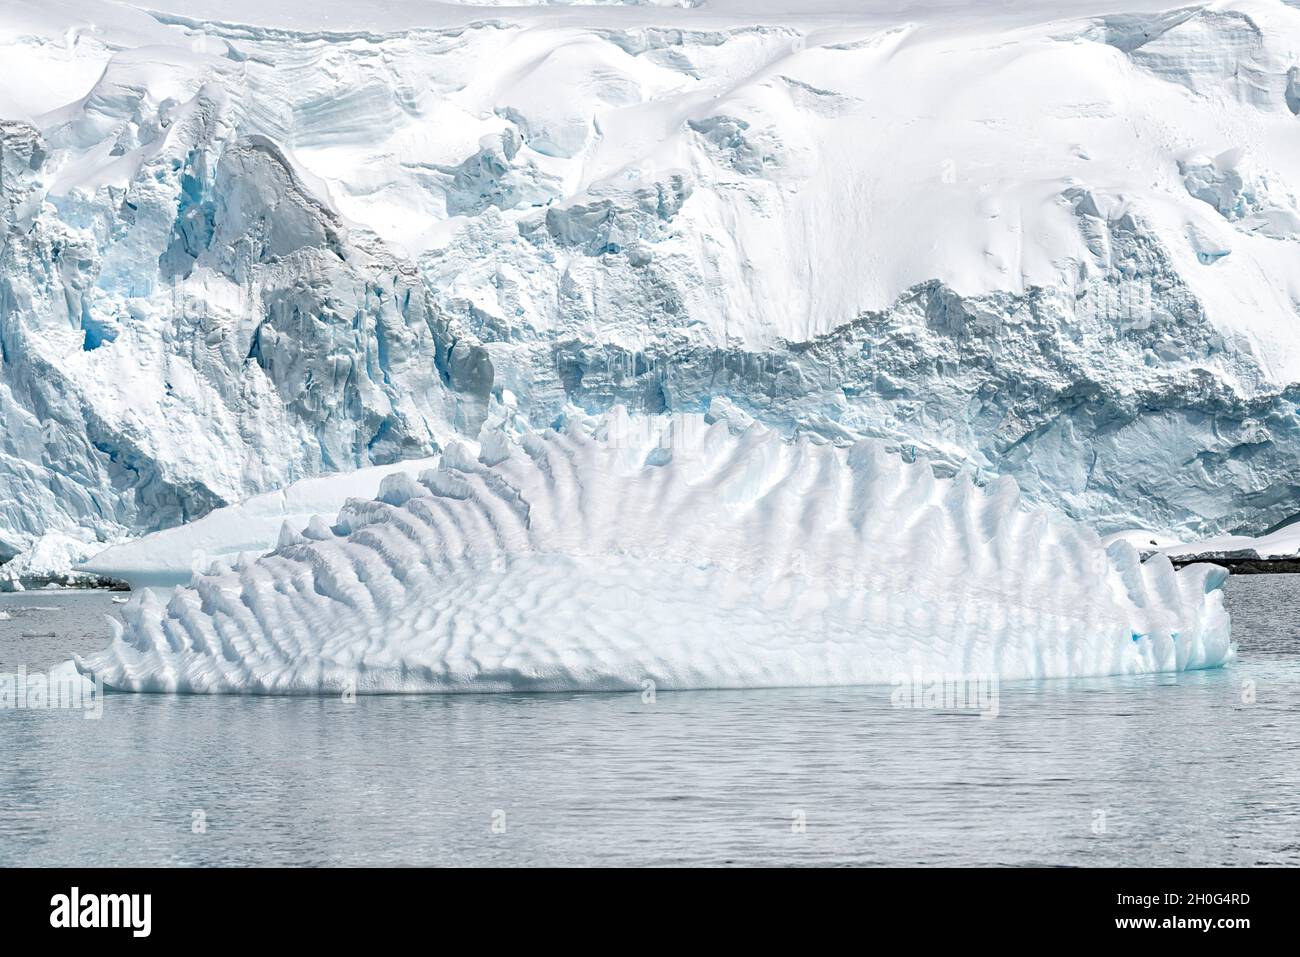 Drifting icerberg in front of a melting glacier breaking into the sea. Paradise Harbor, Grahamland, Antarctica Stock Photo